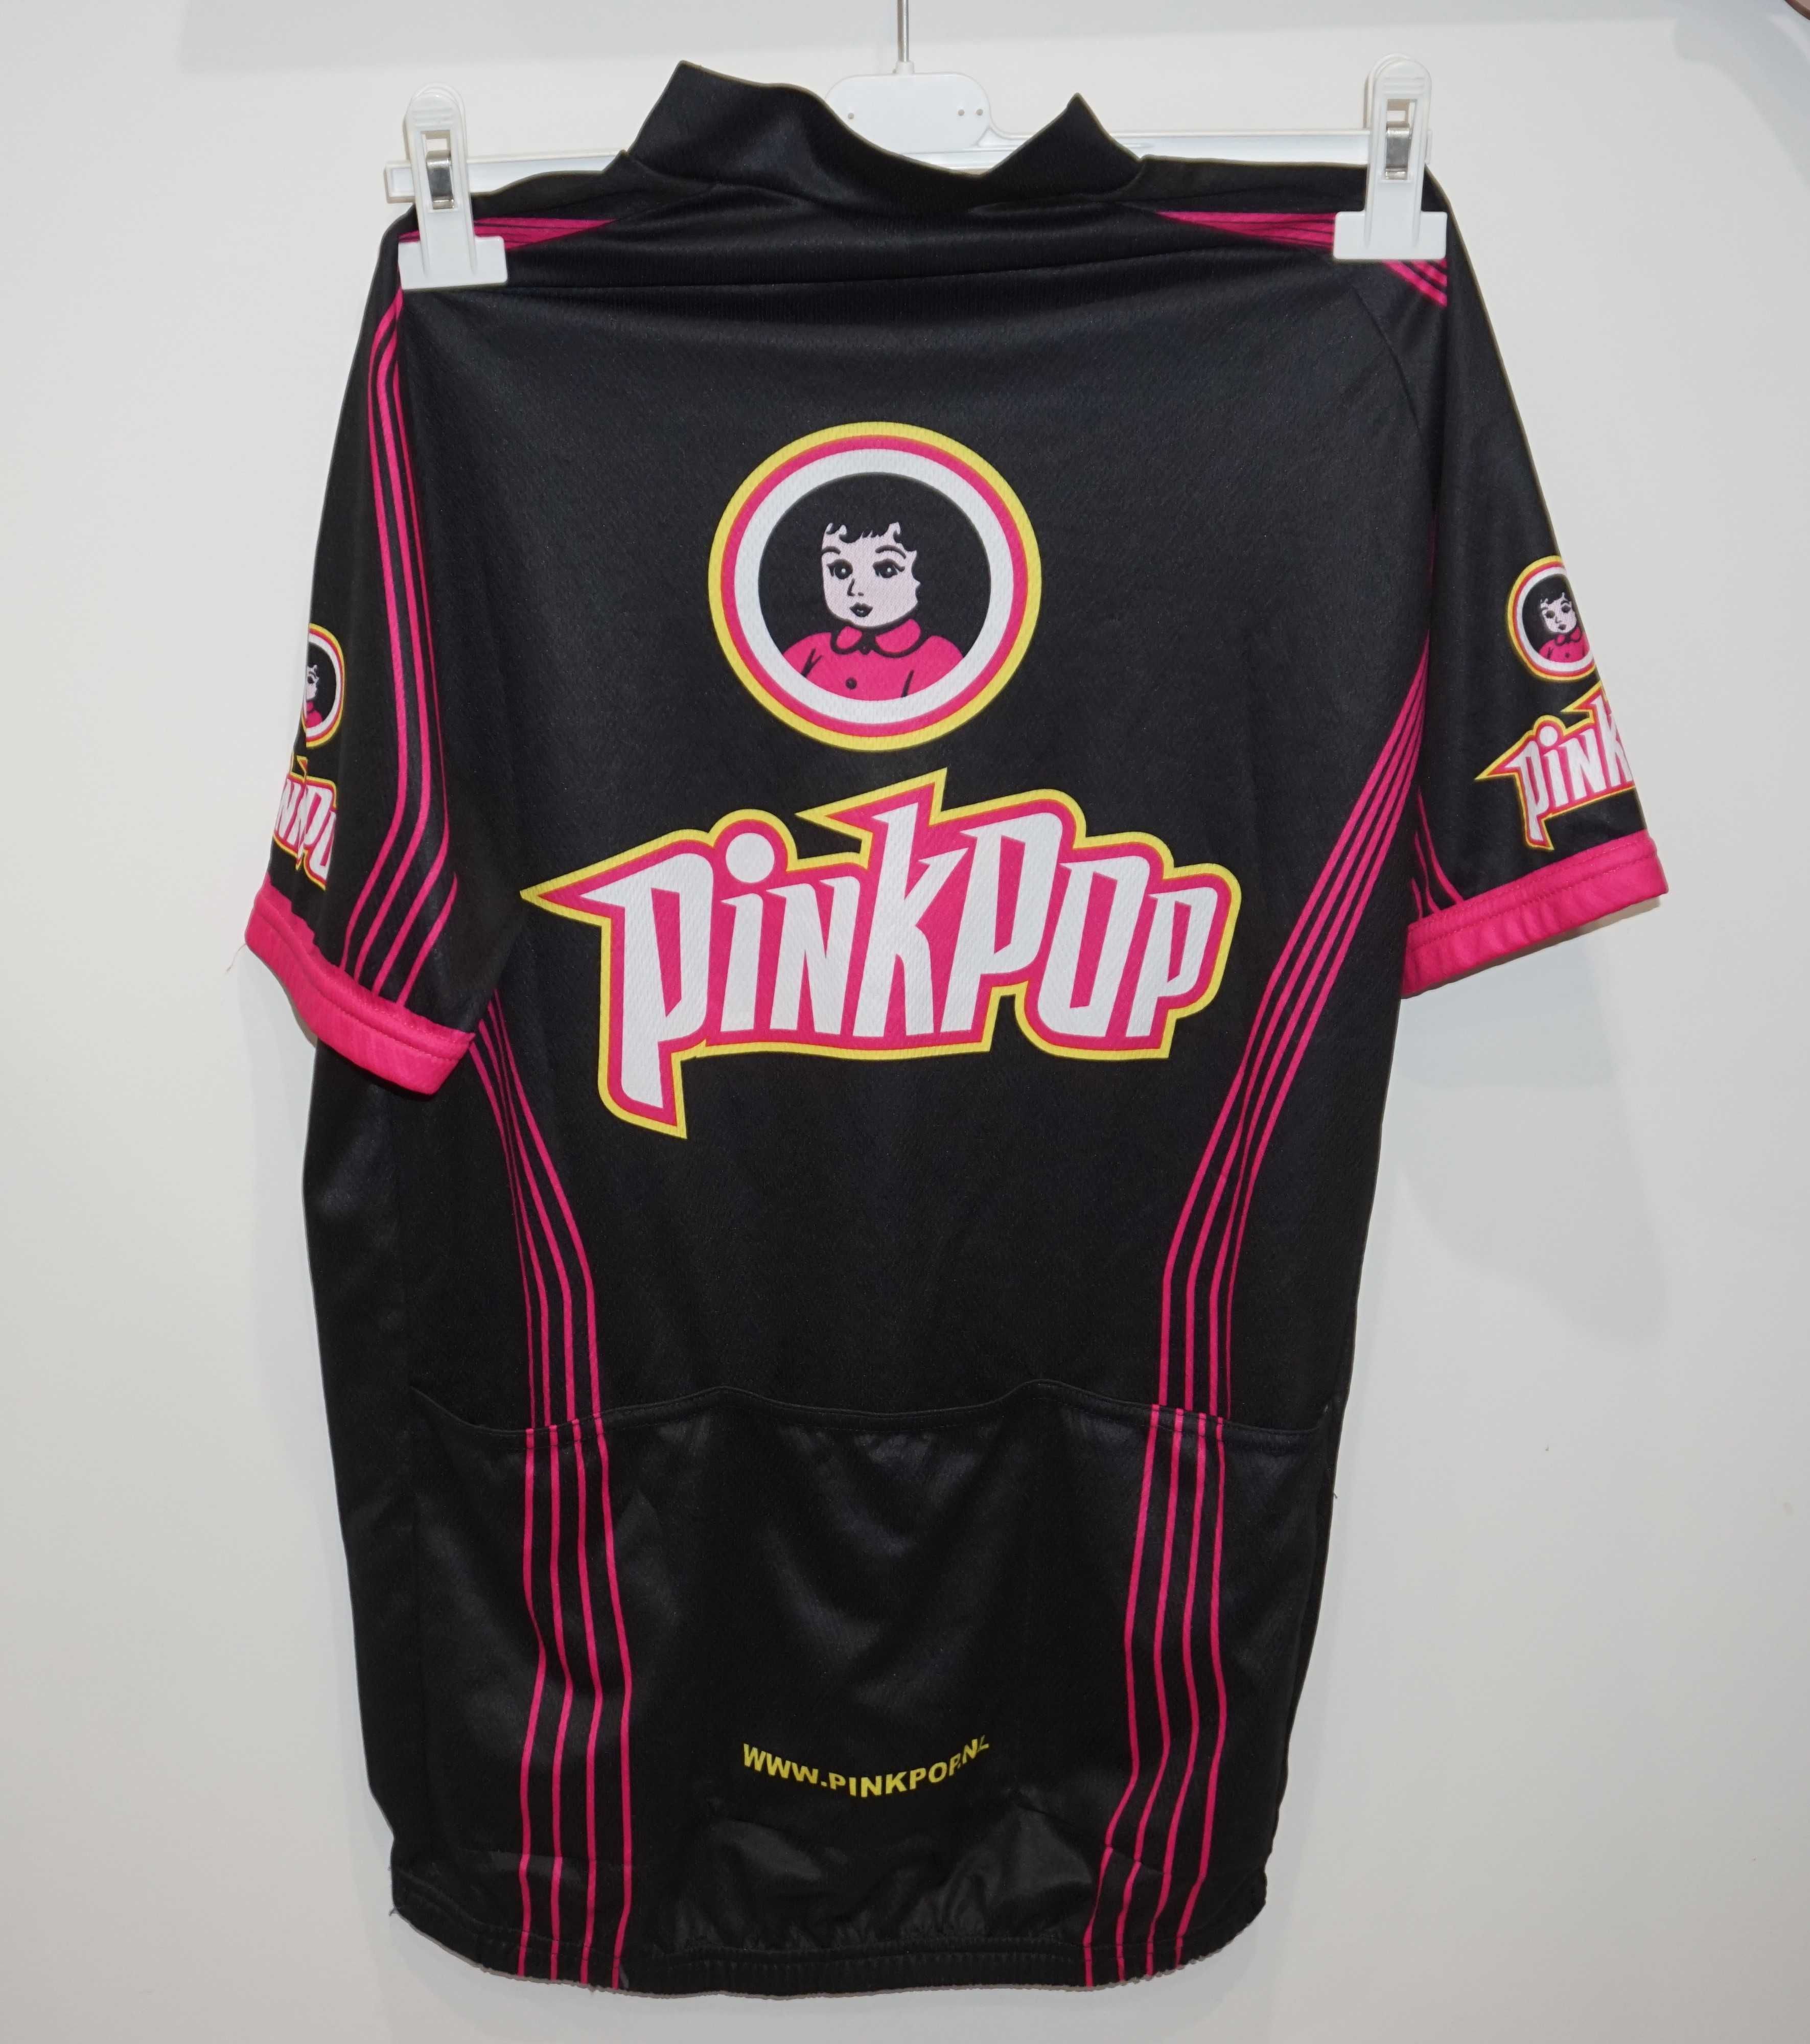 Дамска колоездачна тениска Jersey Bonfanti Pink Pop Размер S